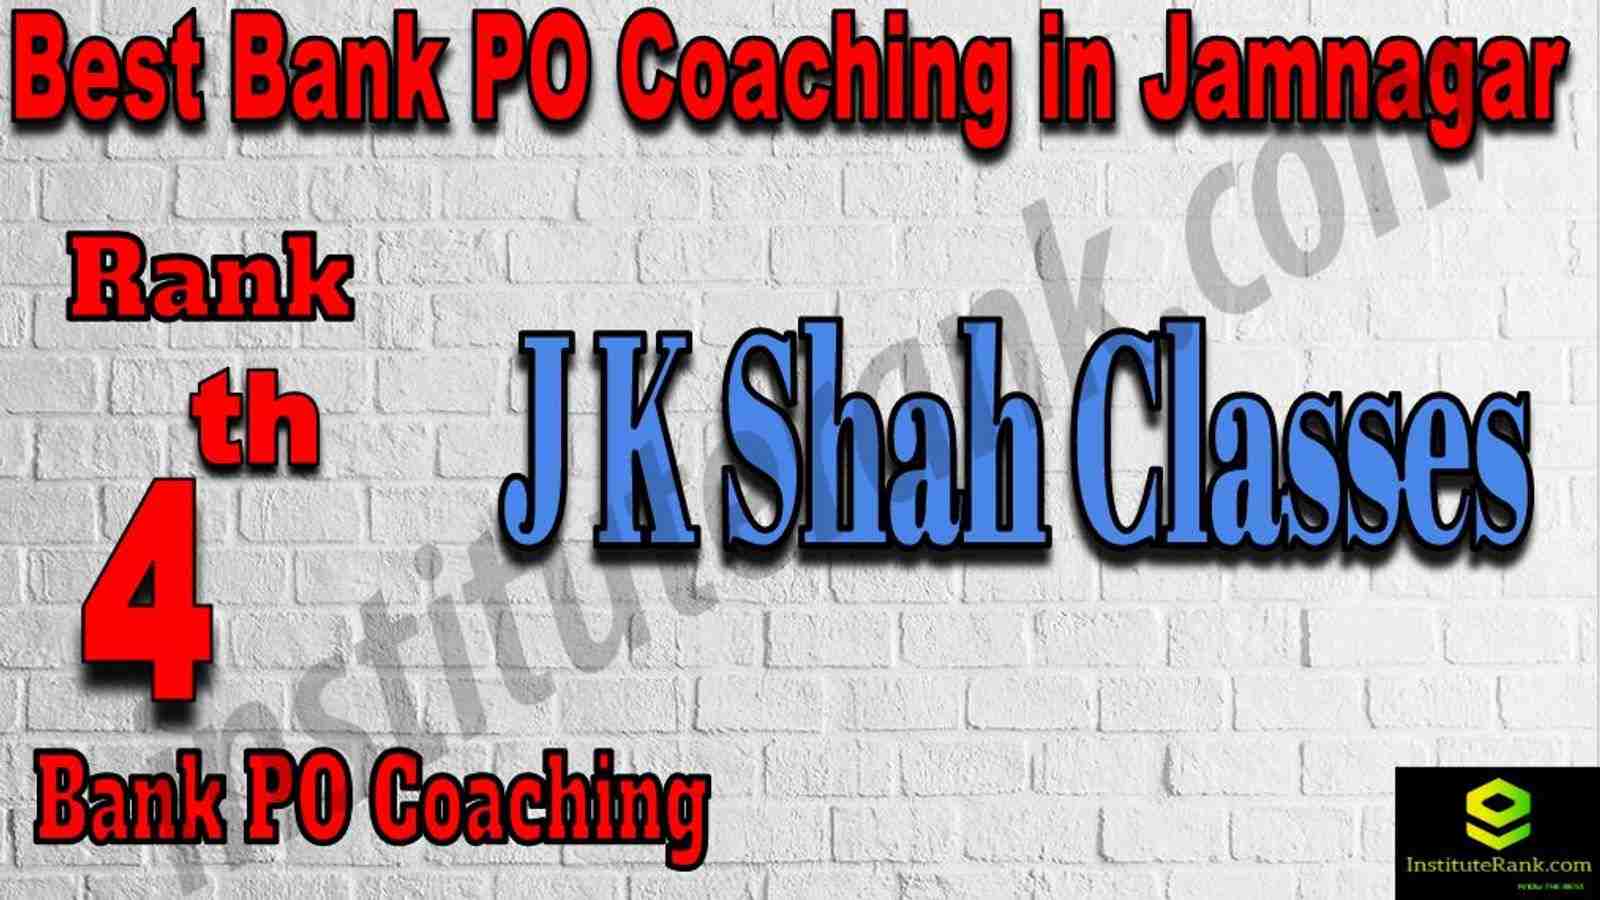 4th Best Bank PO Coaching in Jamnagar